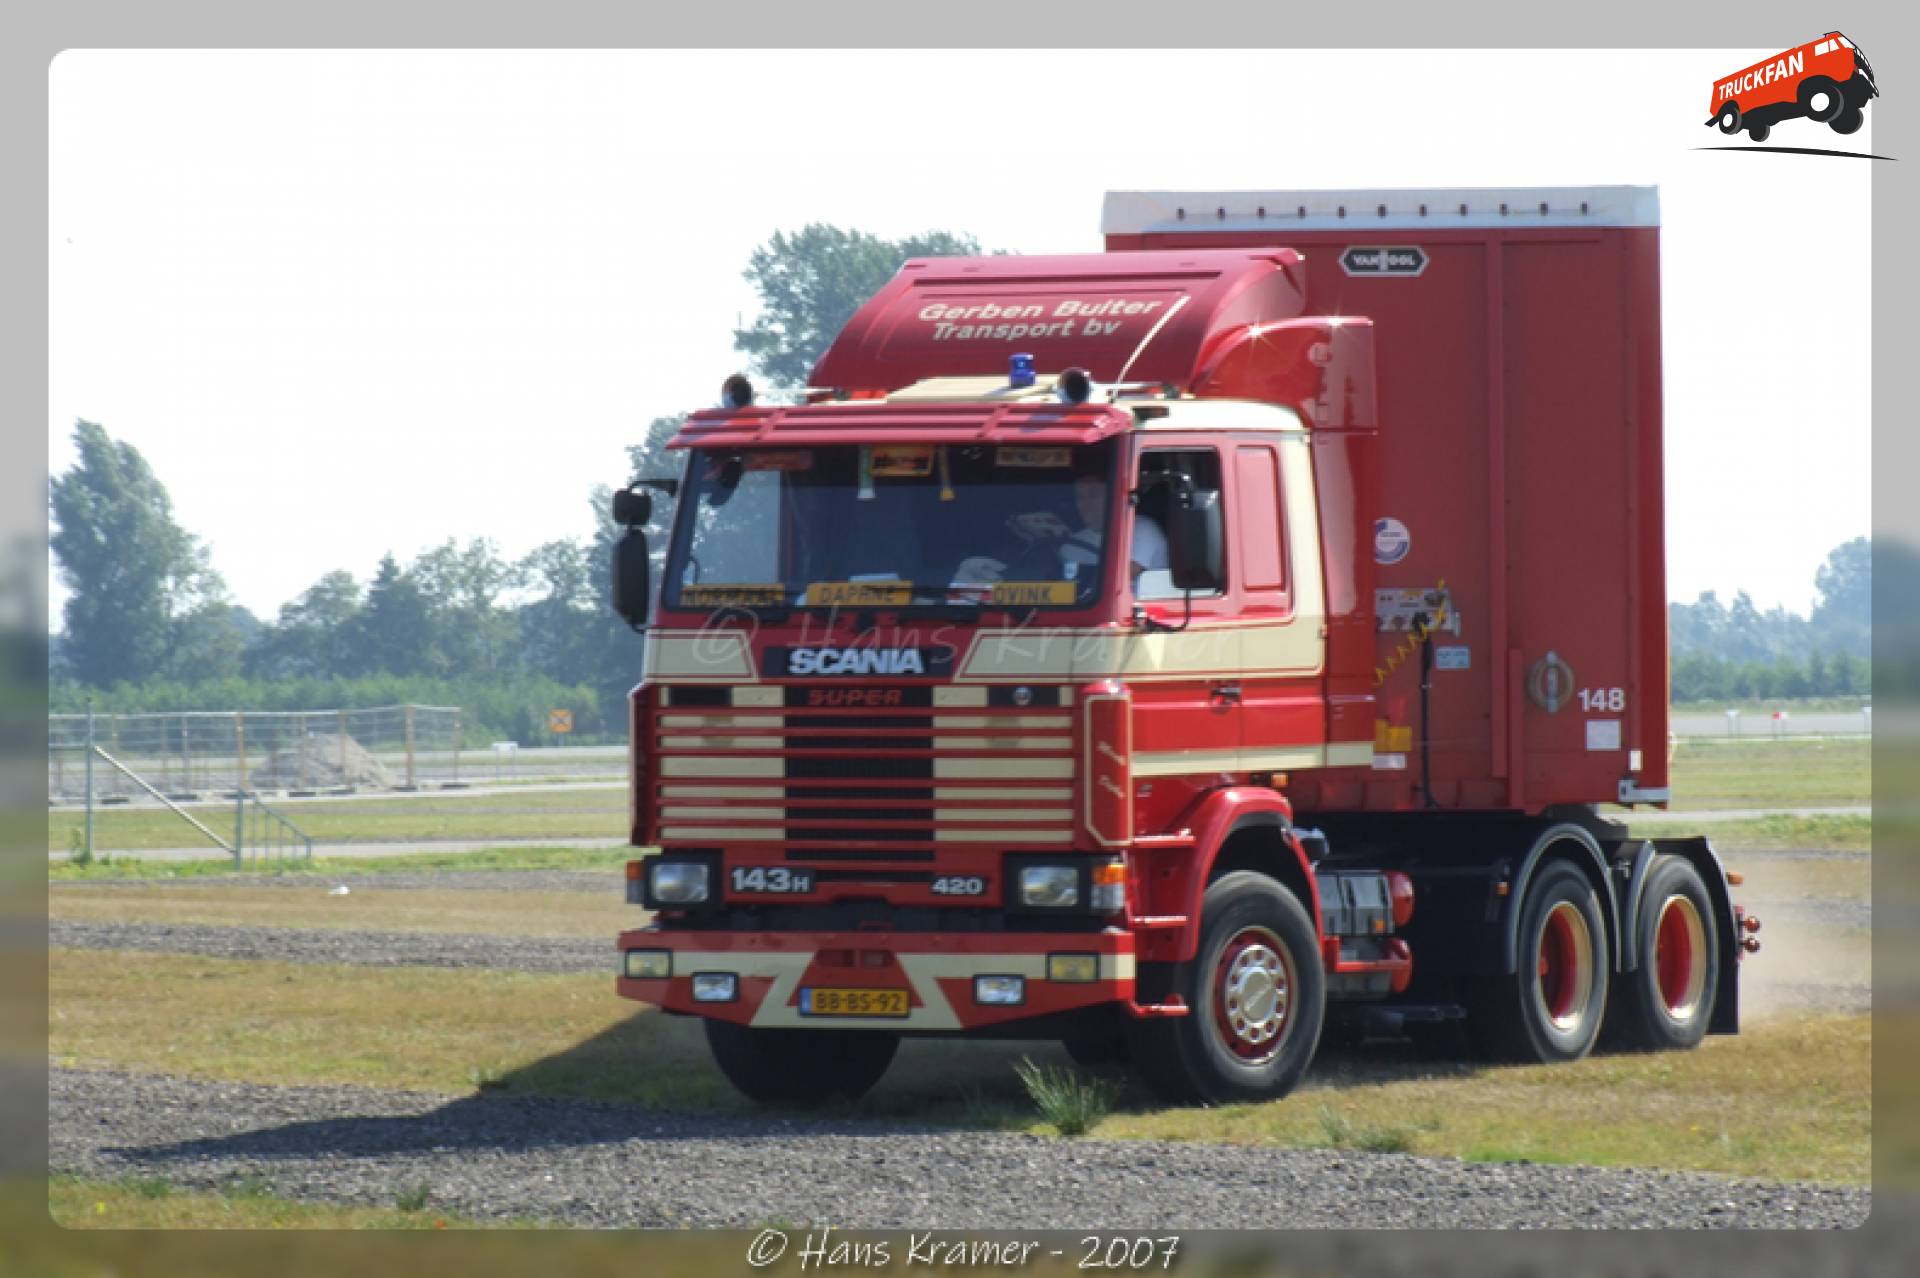 Foto Scania Van Gerben Buiter Transport B V TruckFan